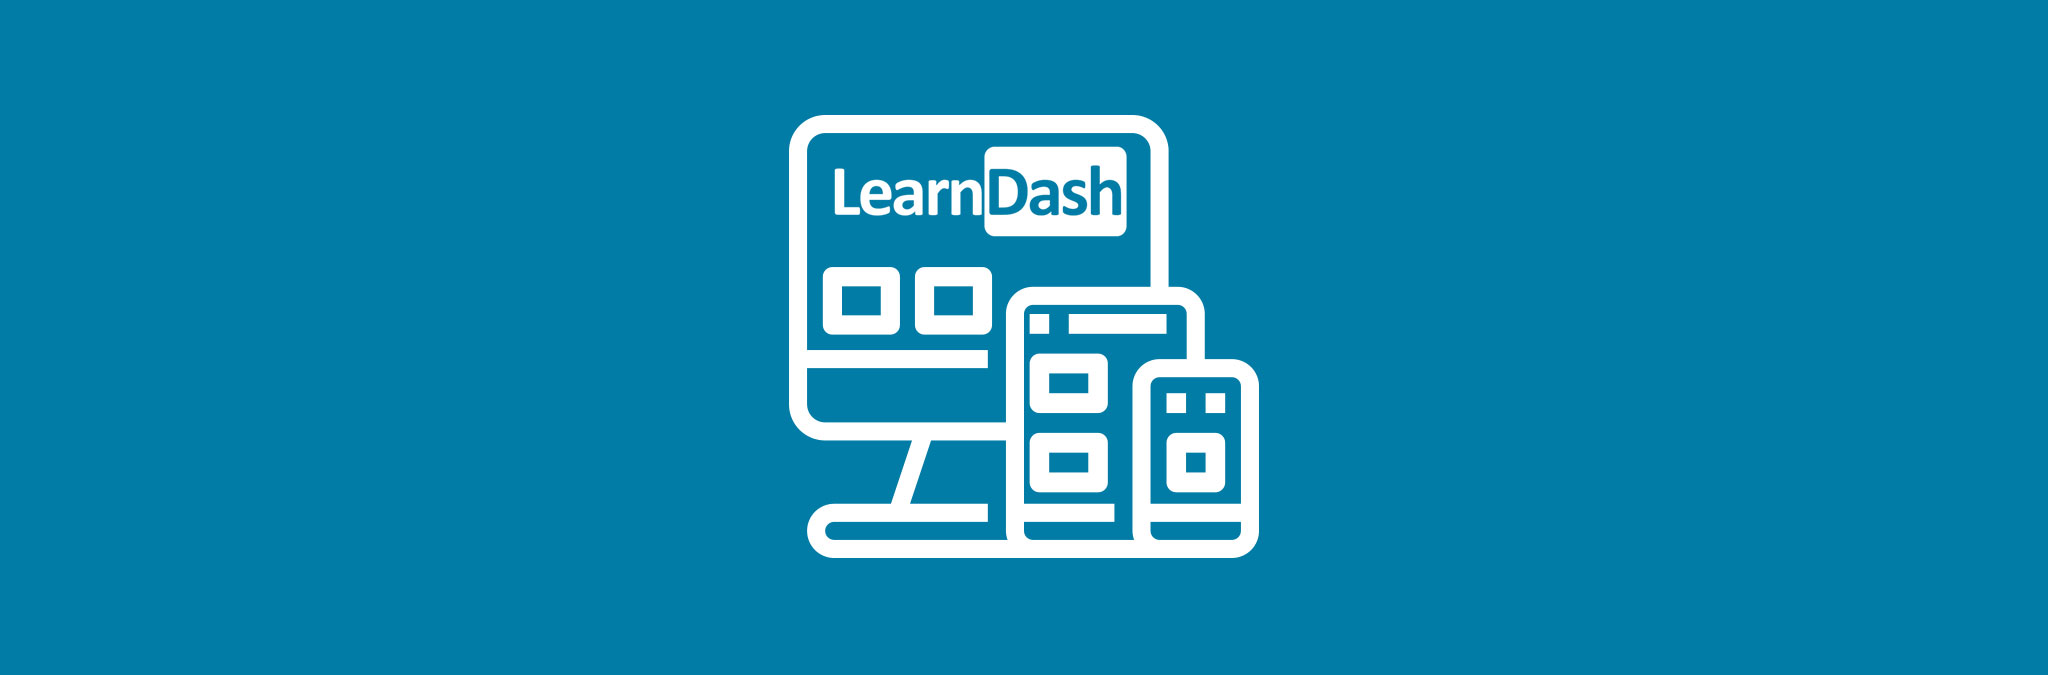 Adaptive Learning With LearnDash